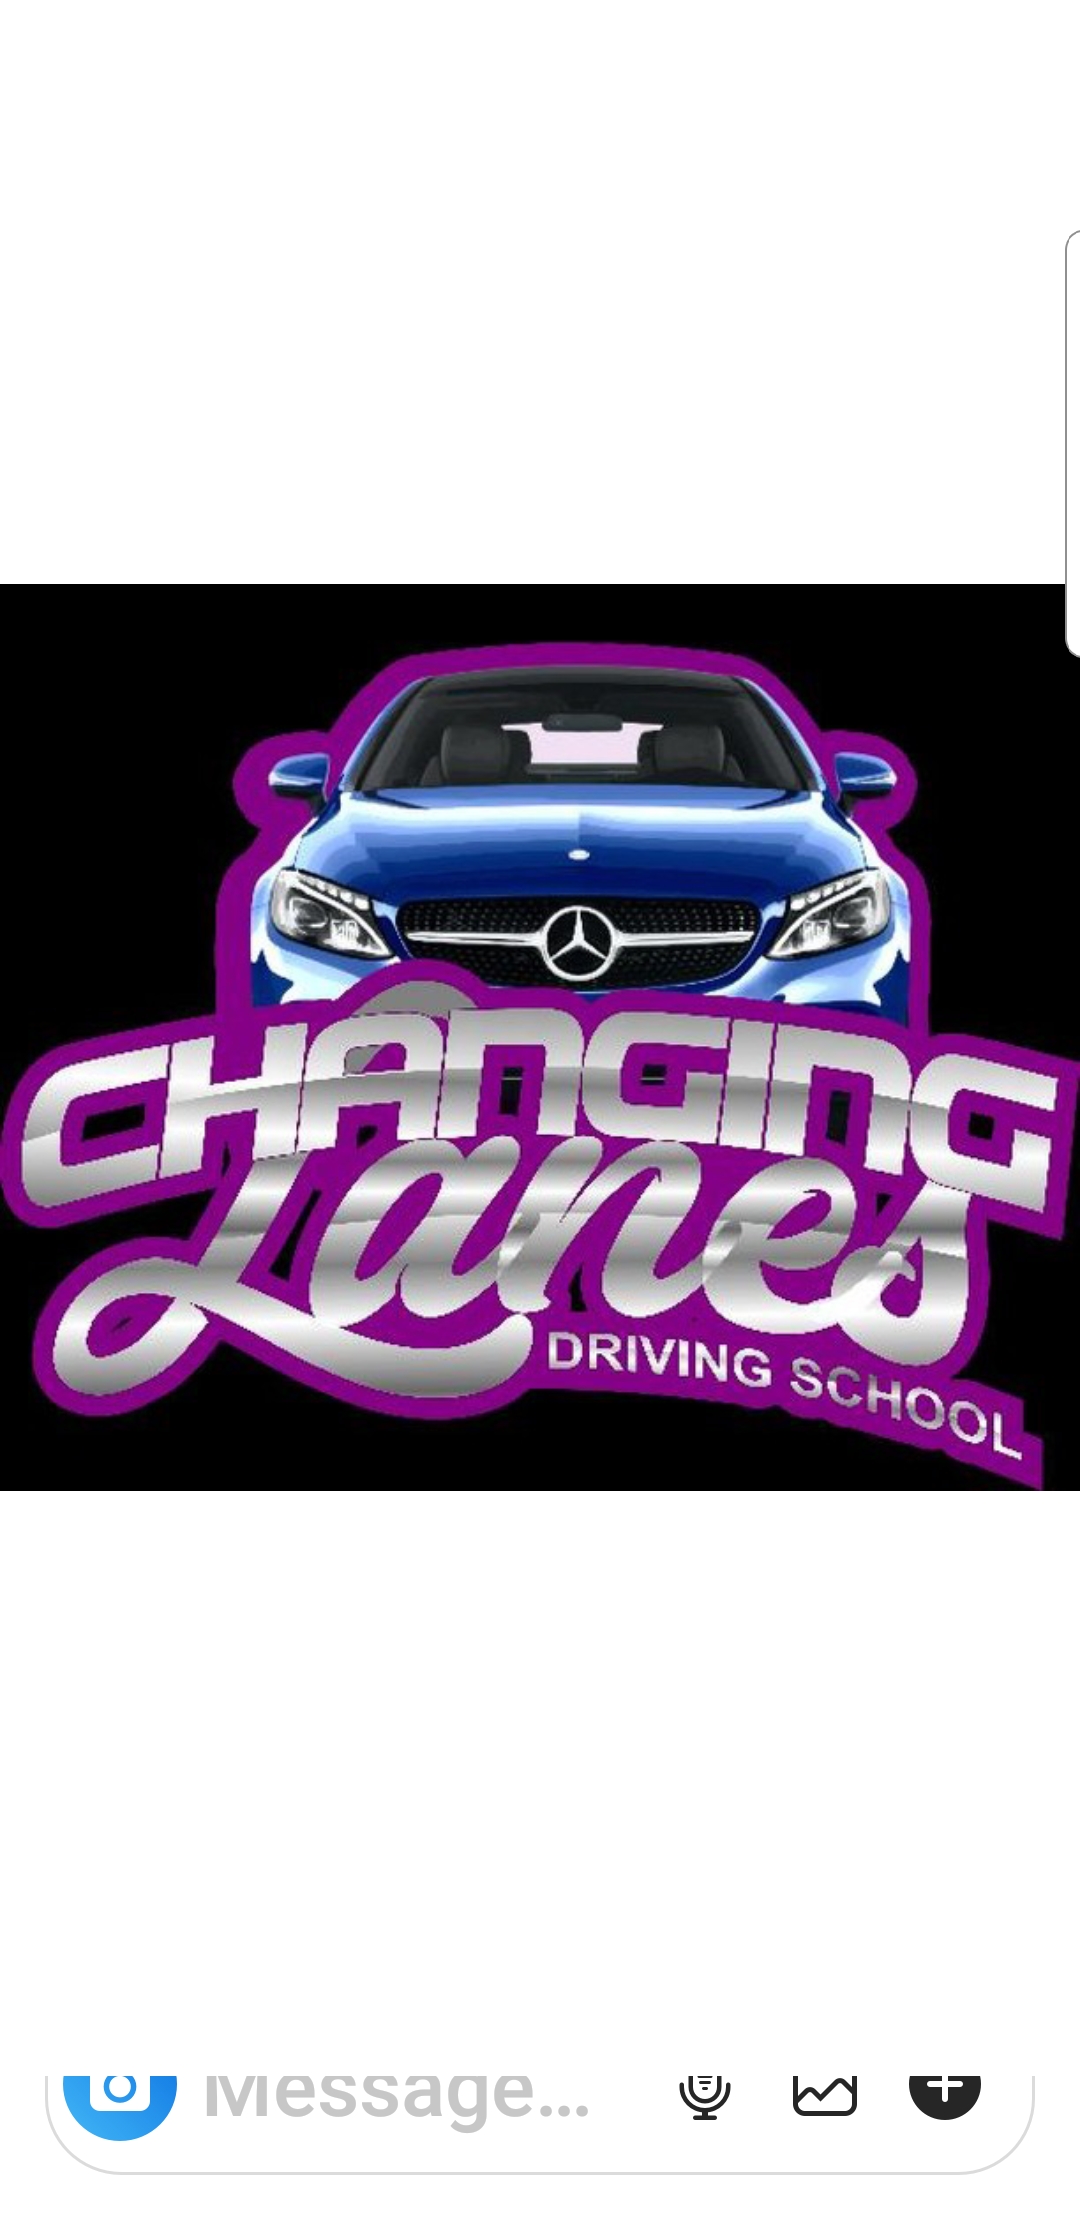 Changing Lanes Driving School